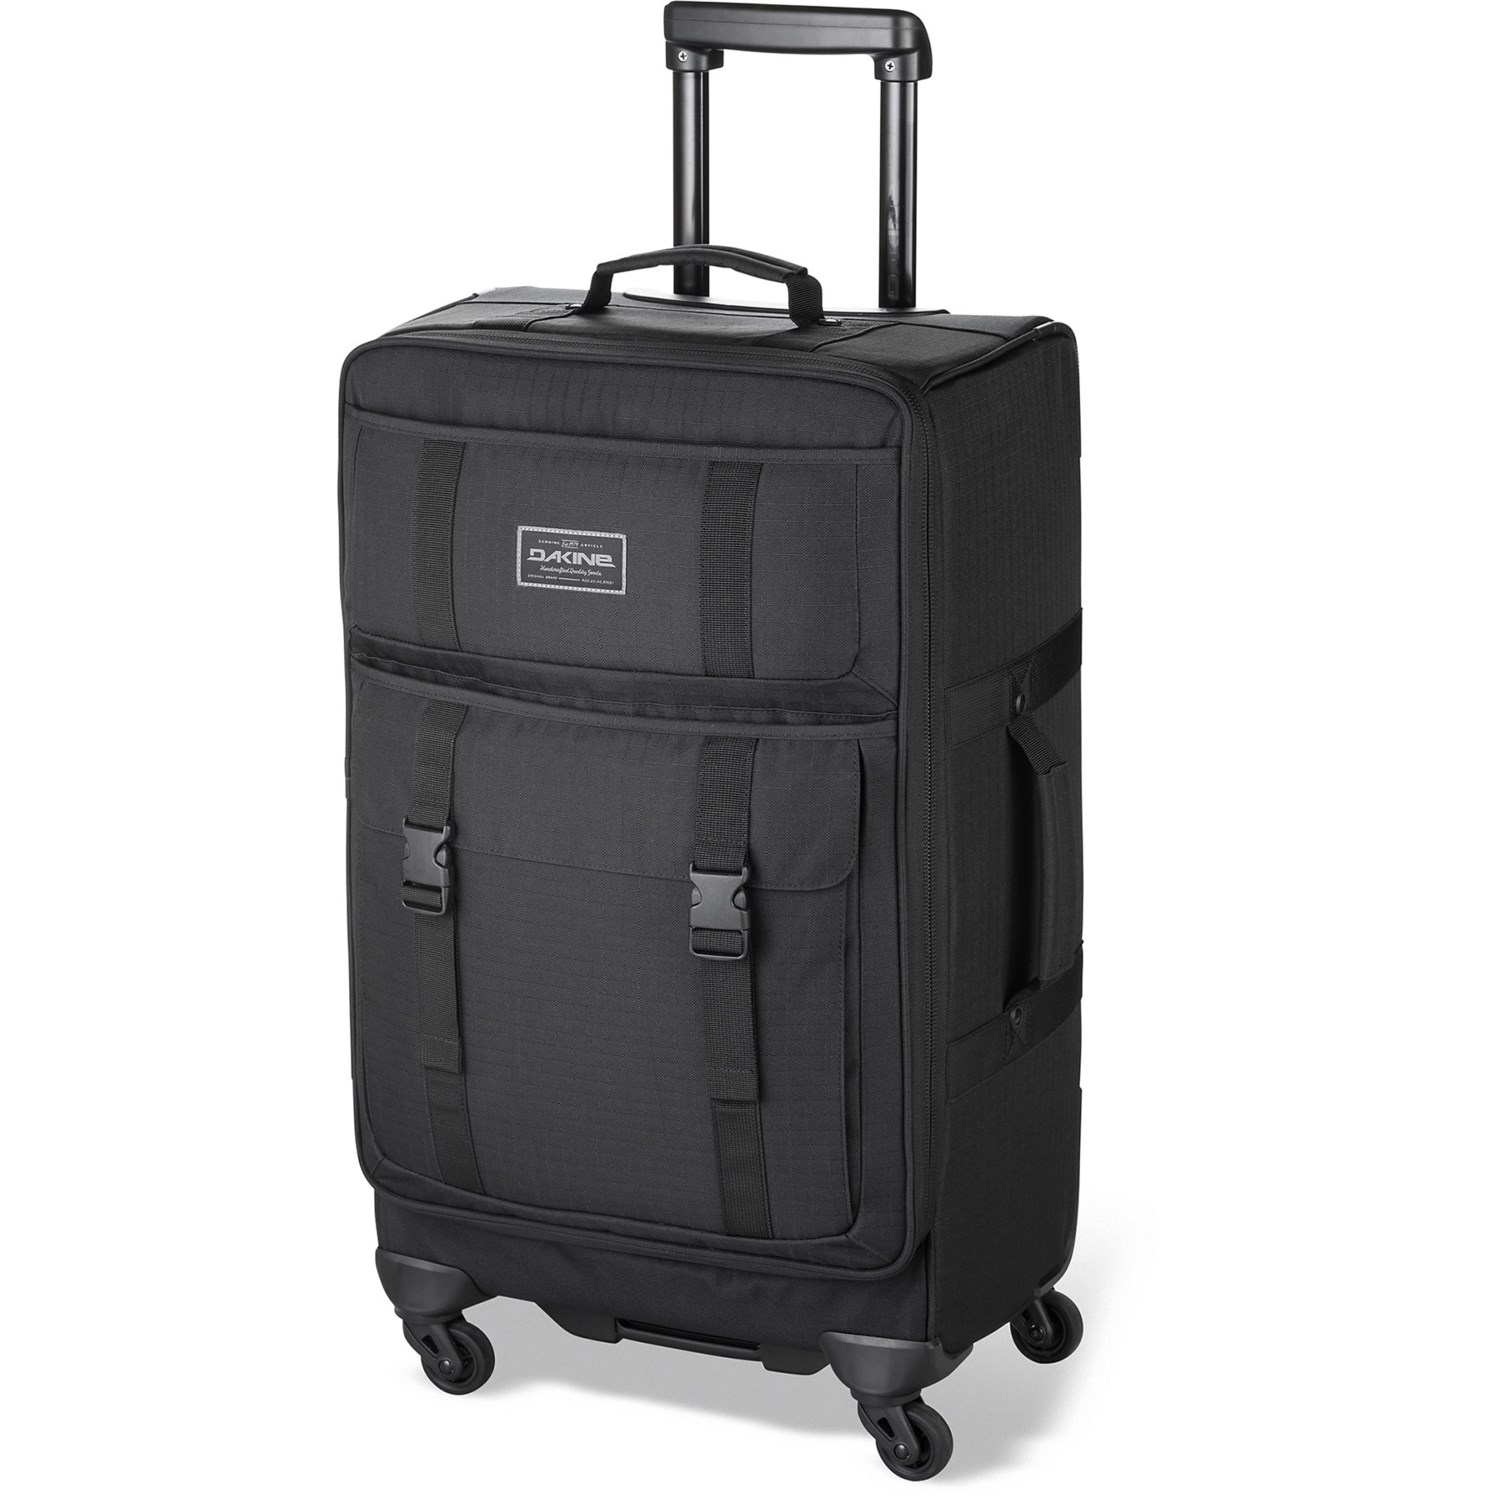 DaKine Cruiser 65L Rolling Suitcase - Save 40%